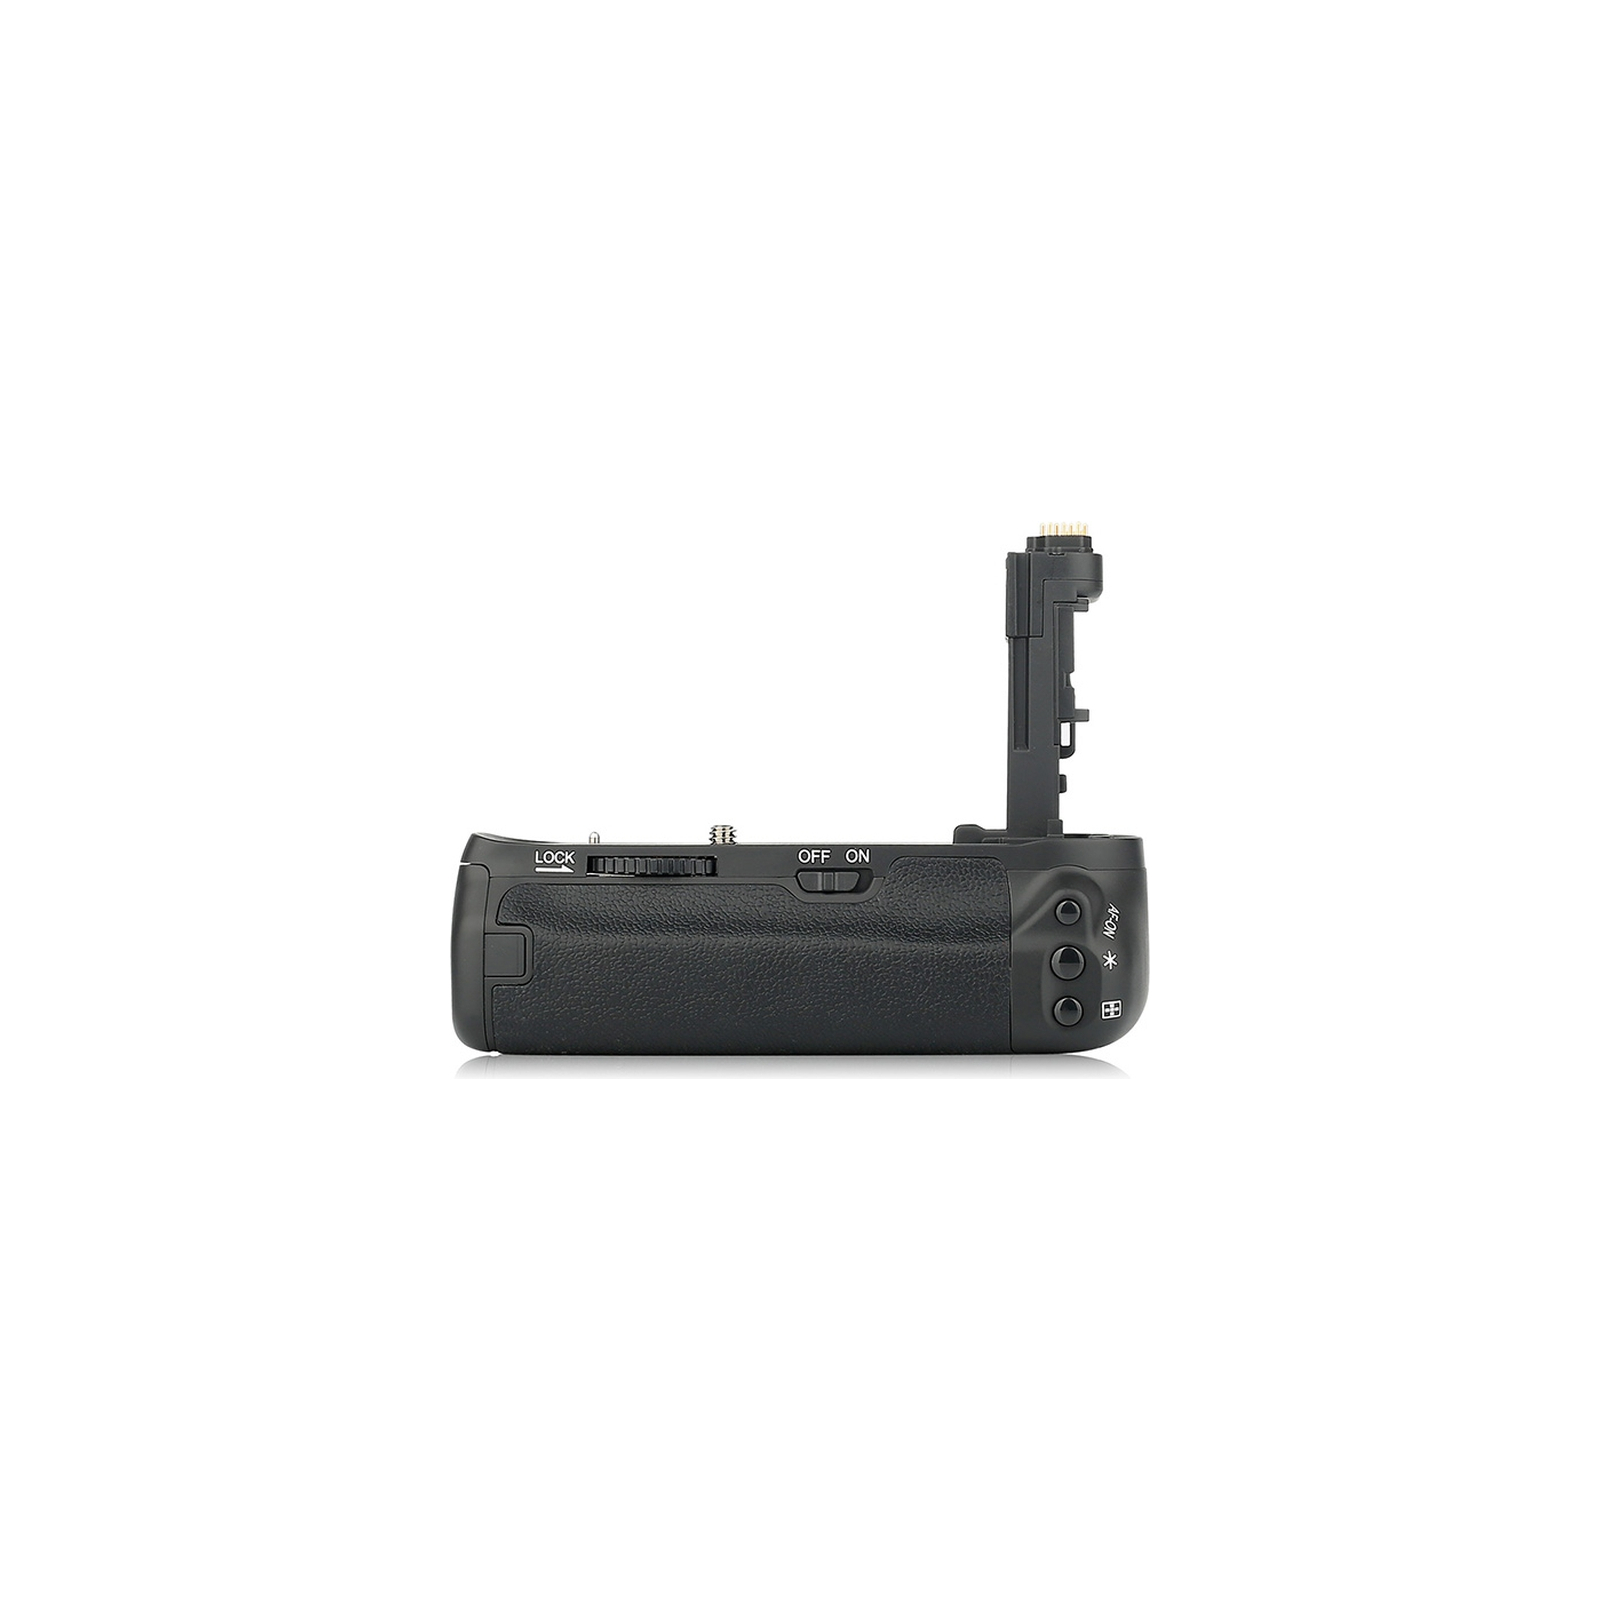 Батарейный блок Meike Canon MK-6D2 PRO (BG950096) изображение 3